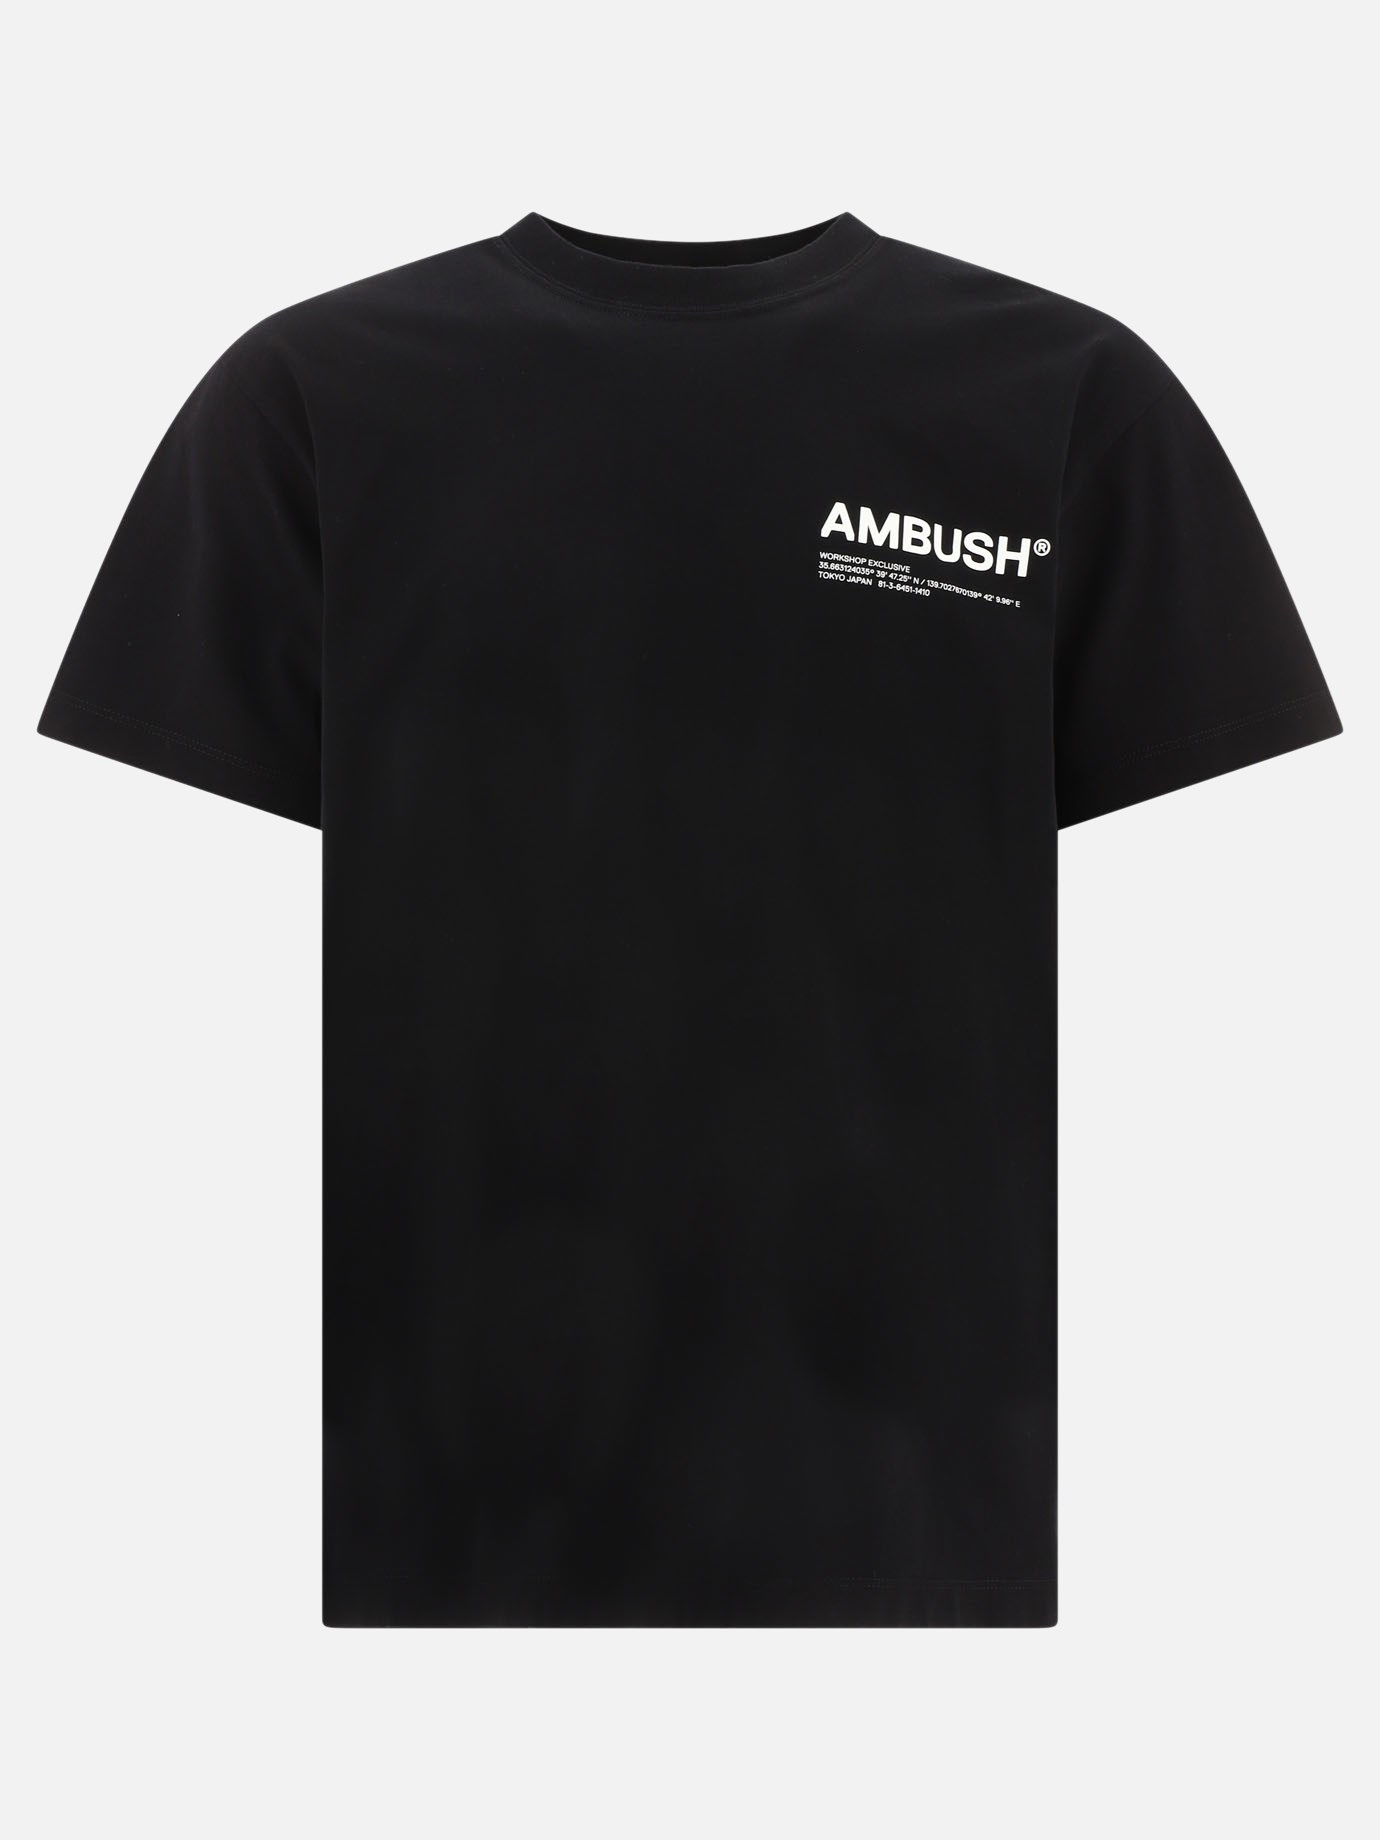  Workshop  t-shirtby Ambush - 0